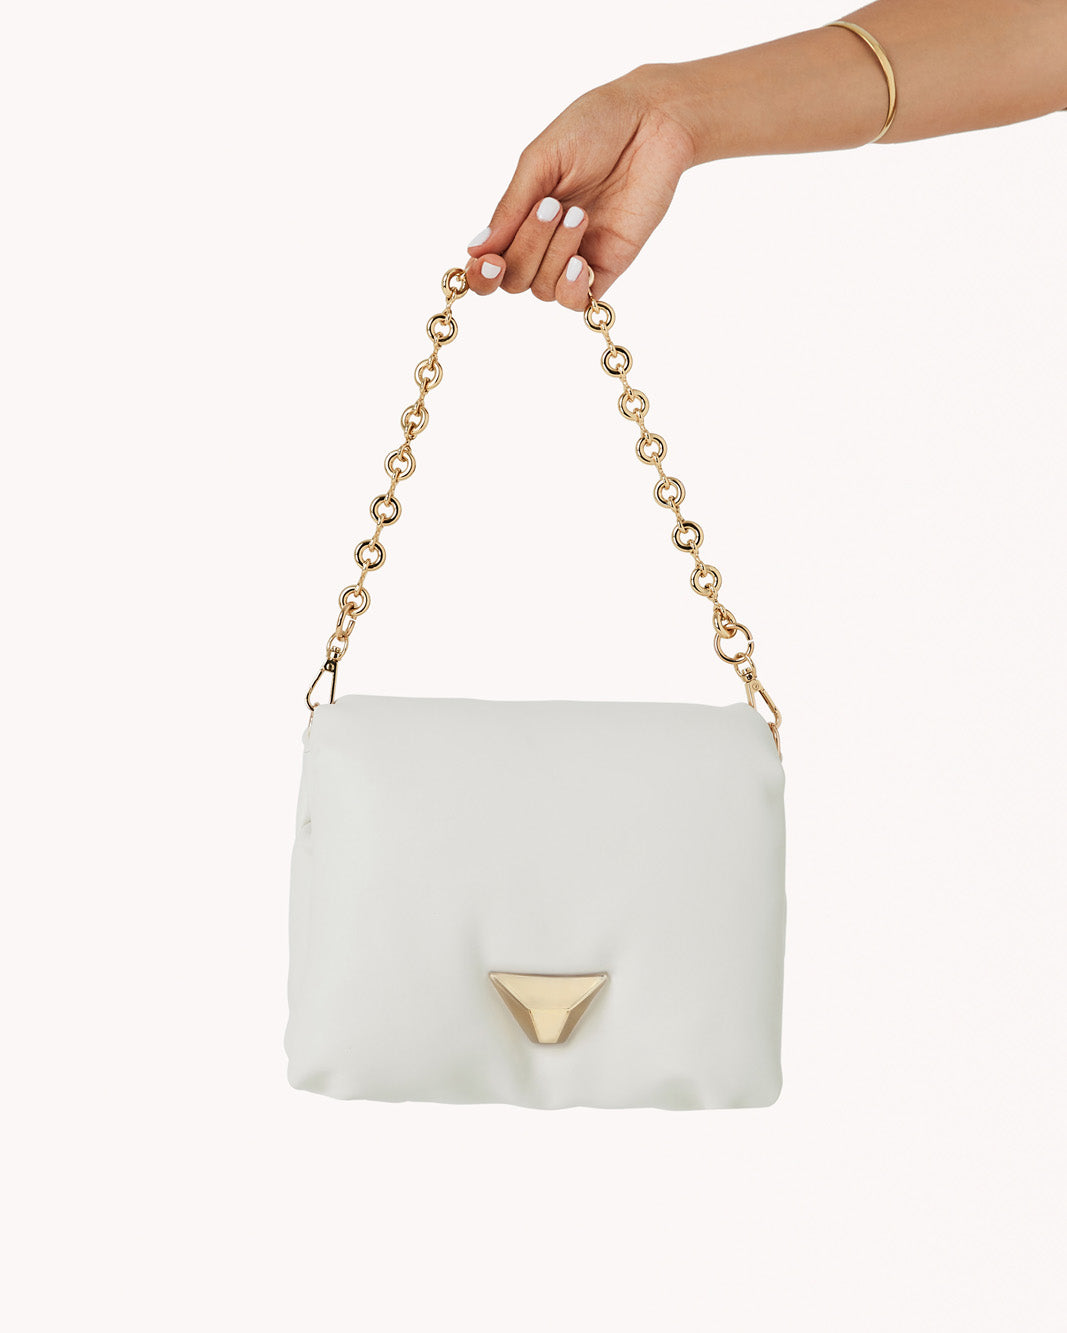 MONTY SHOULDER BAG - BONE-Handbags-Billini--Billini